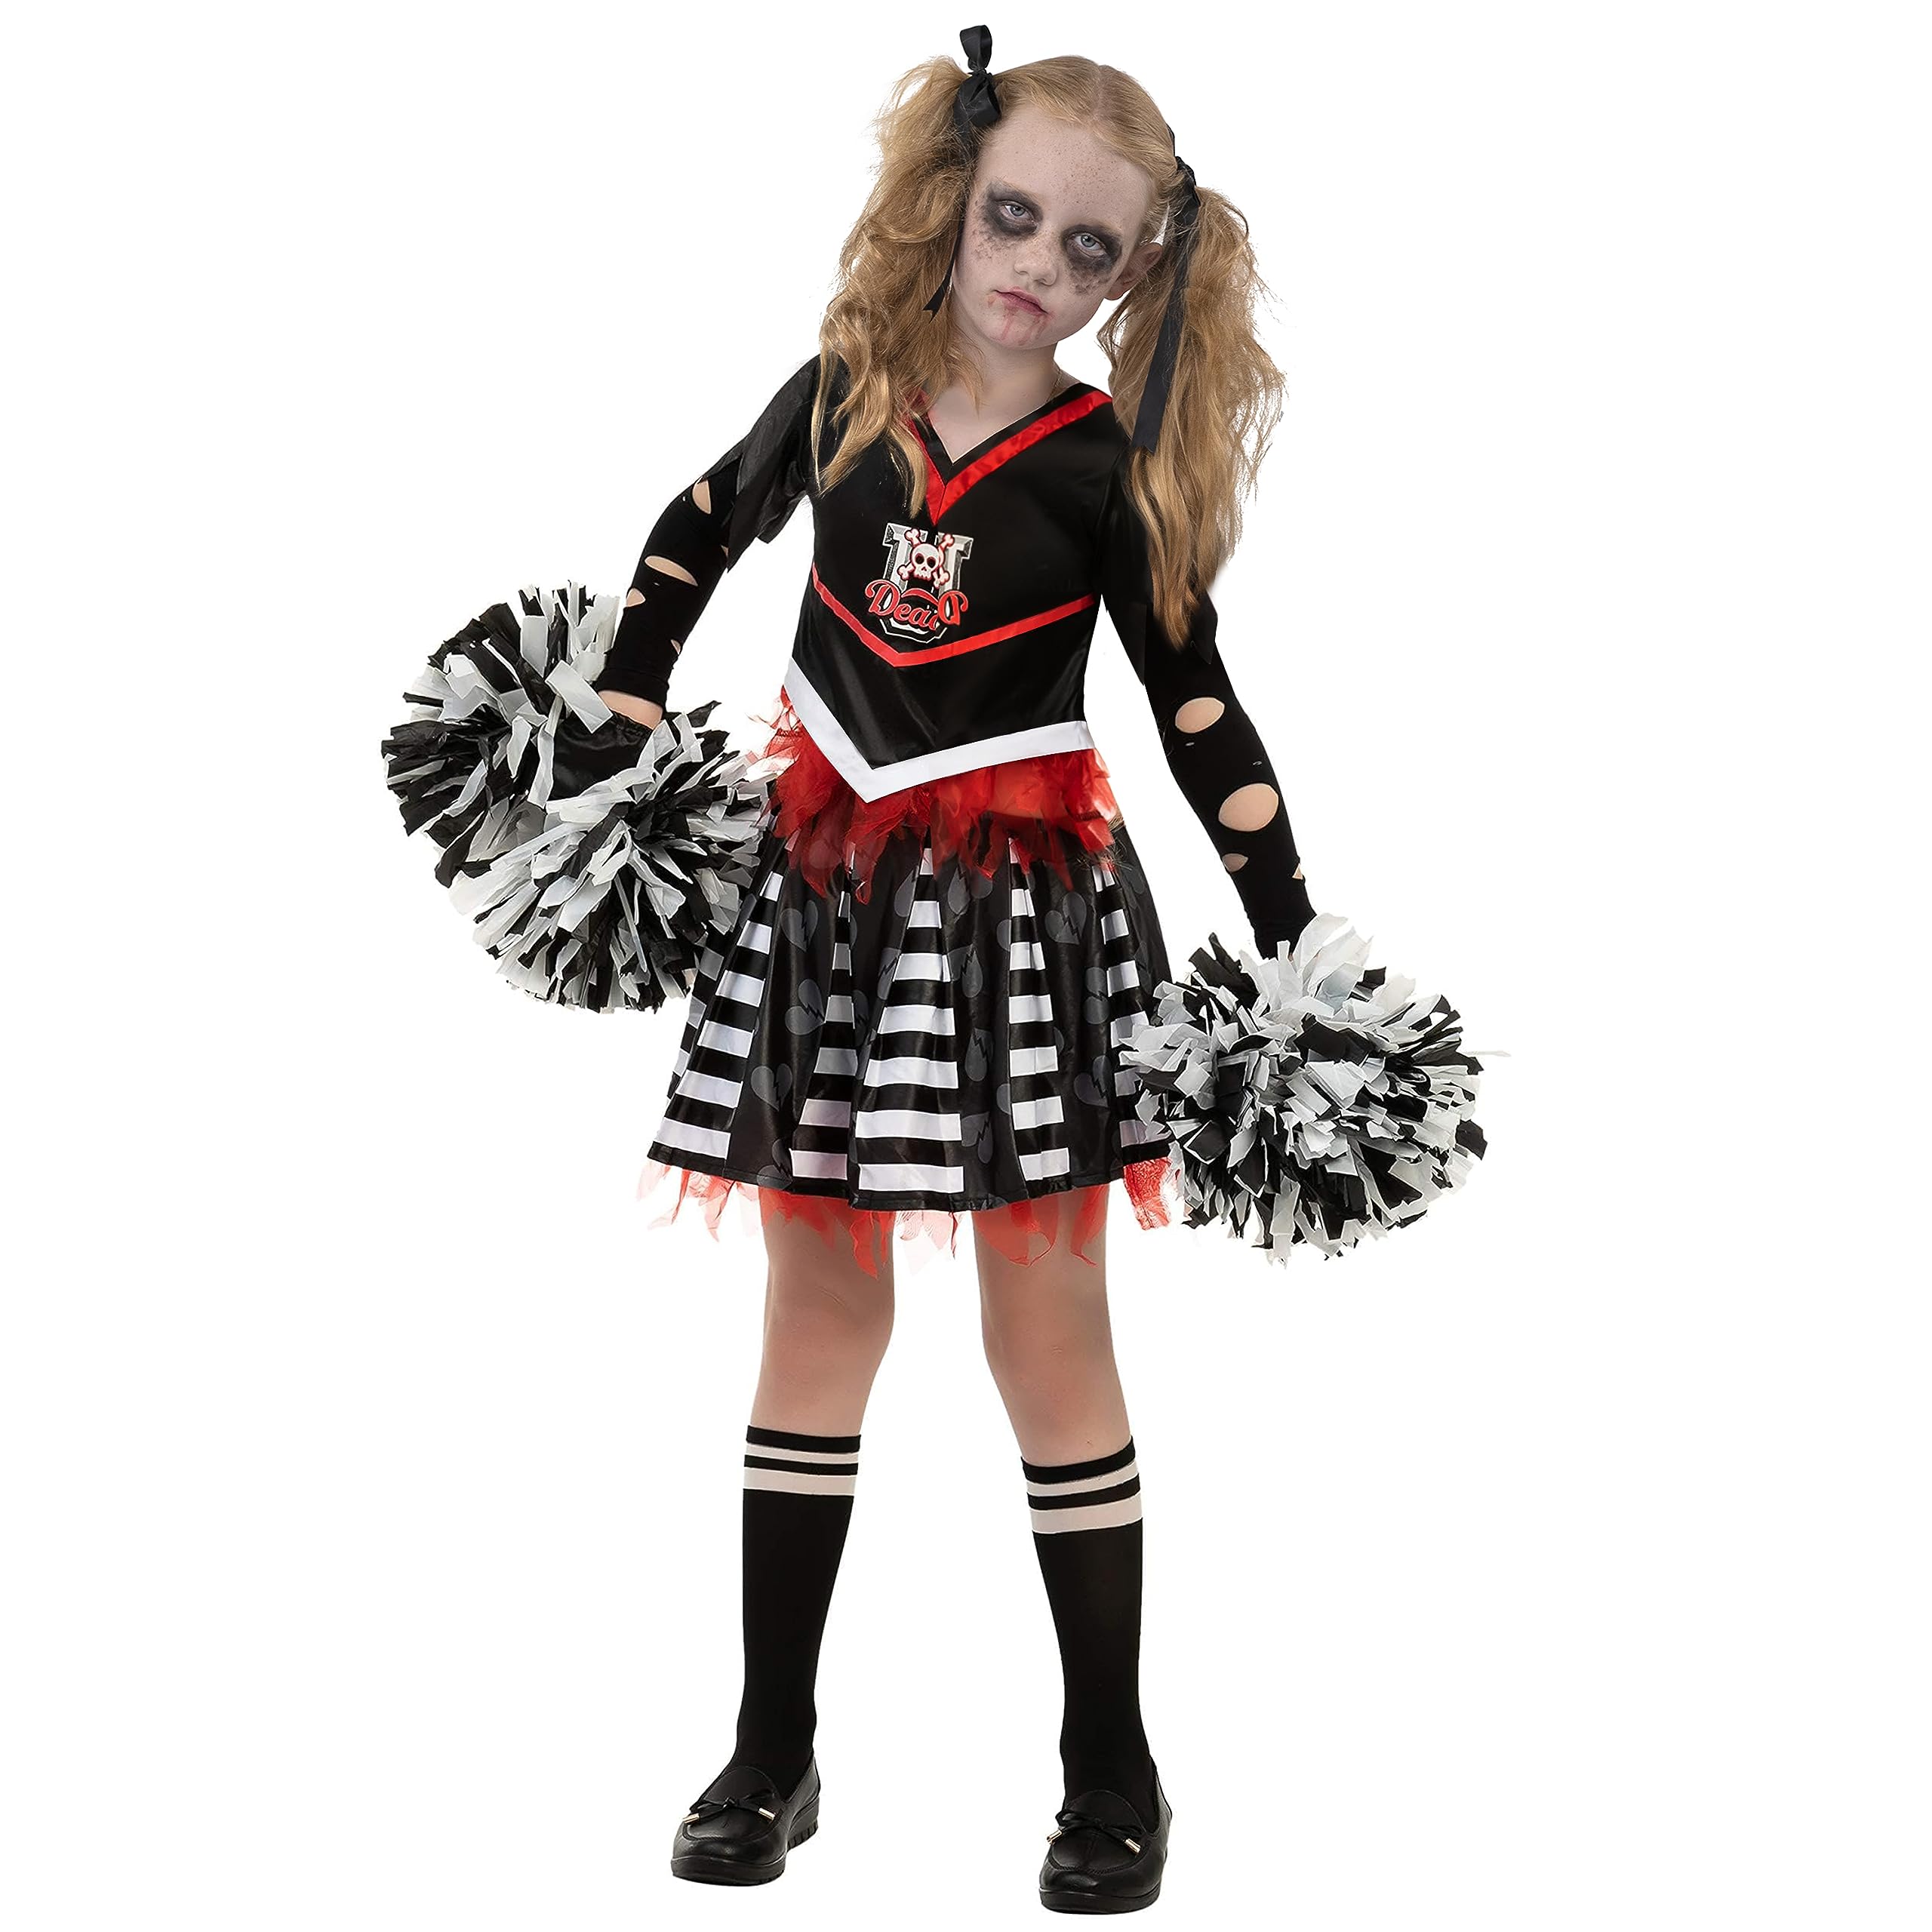 Spooktacular Creations Kids Cheerleader costume, Cheerless Costume for Girls, Scary Spiritless Cheerleader Costume for Halloween